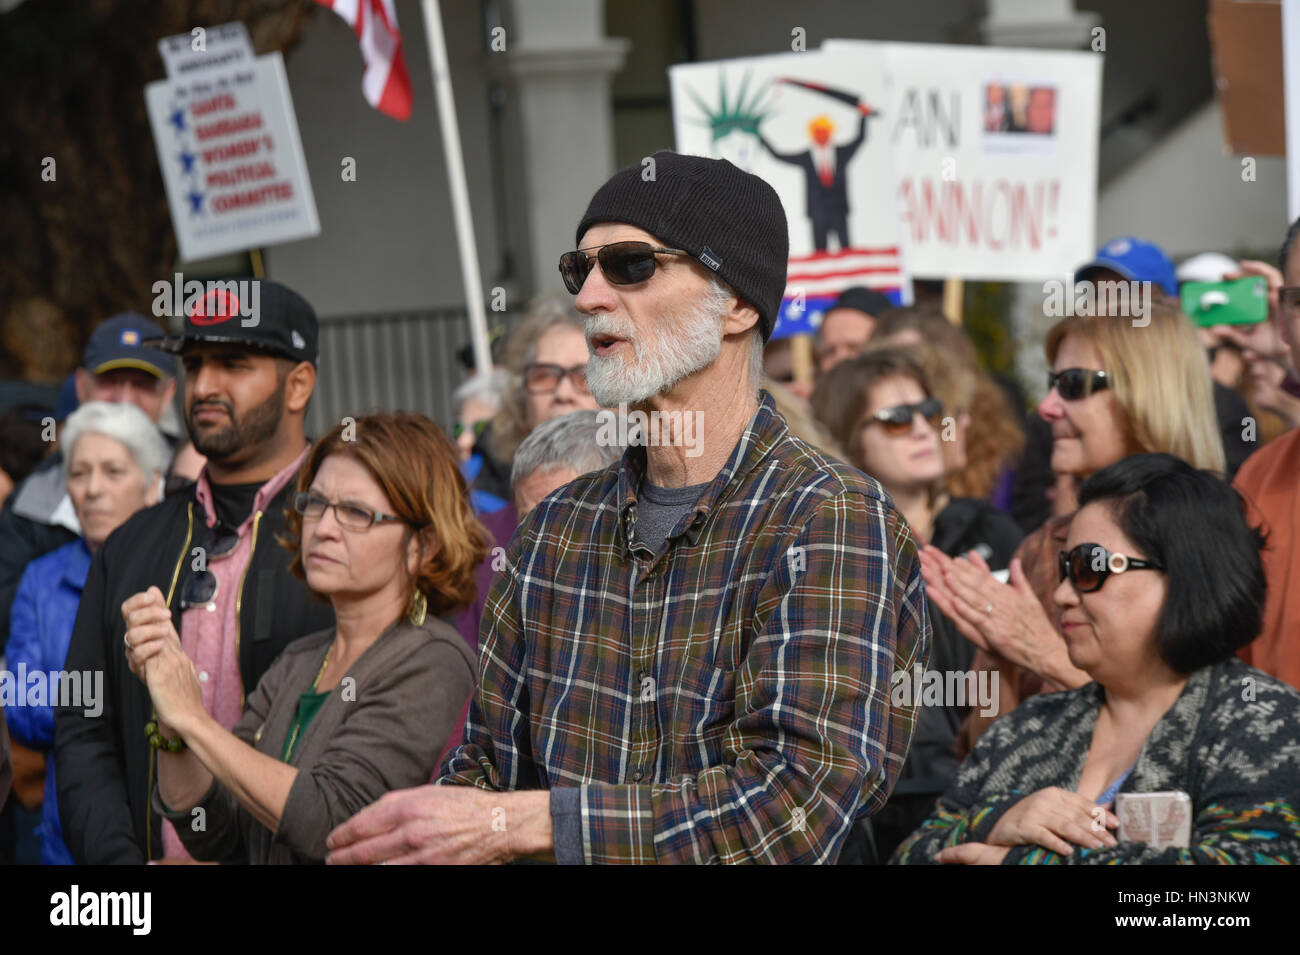 Demonstrators carrying signs at an Anti Muslim Travel Ban rally in Santa Barbara, CA Stock Photo